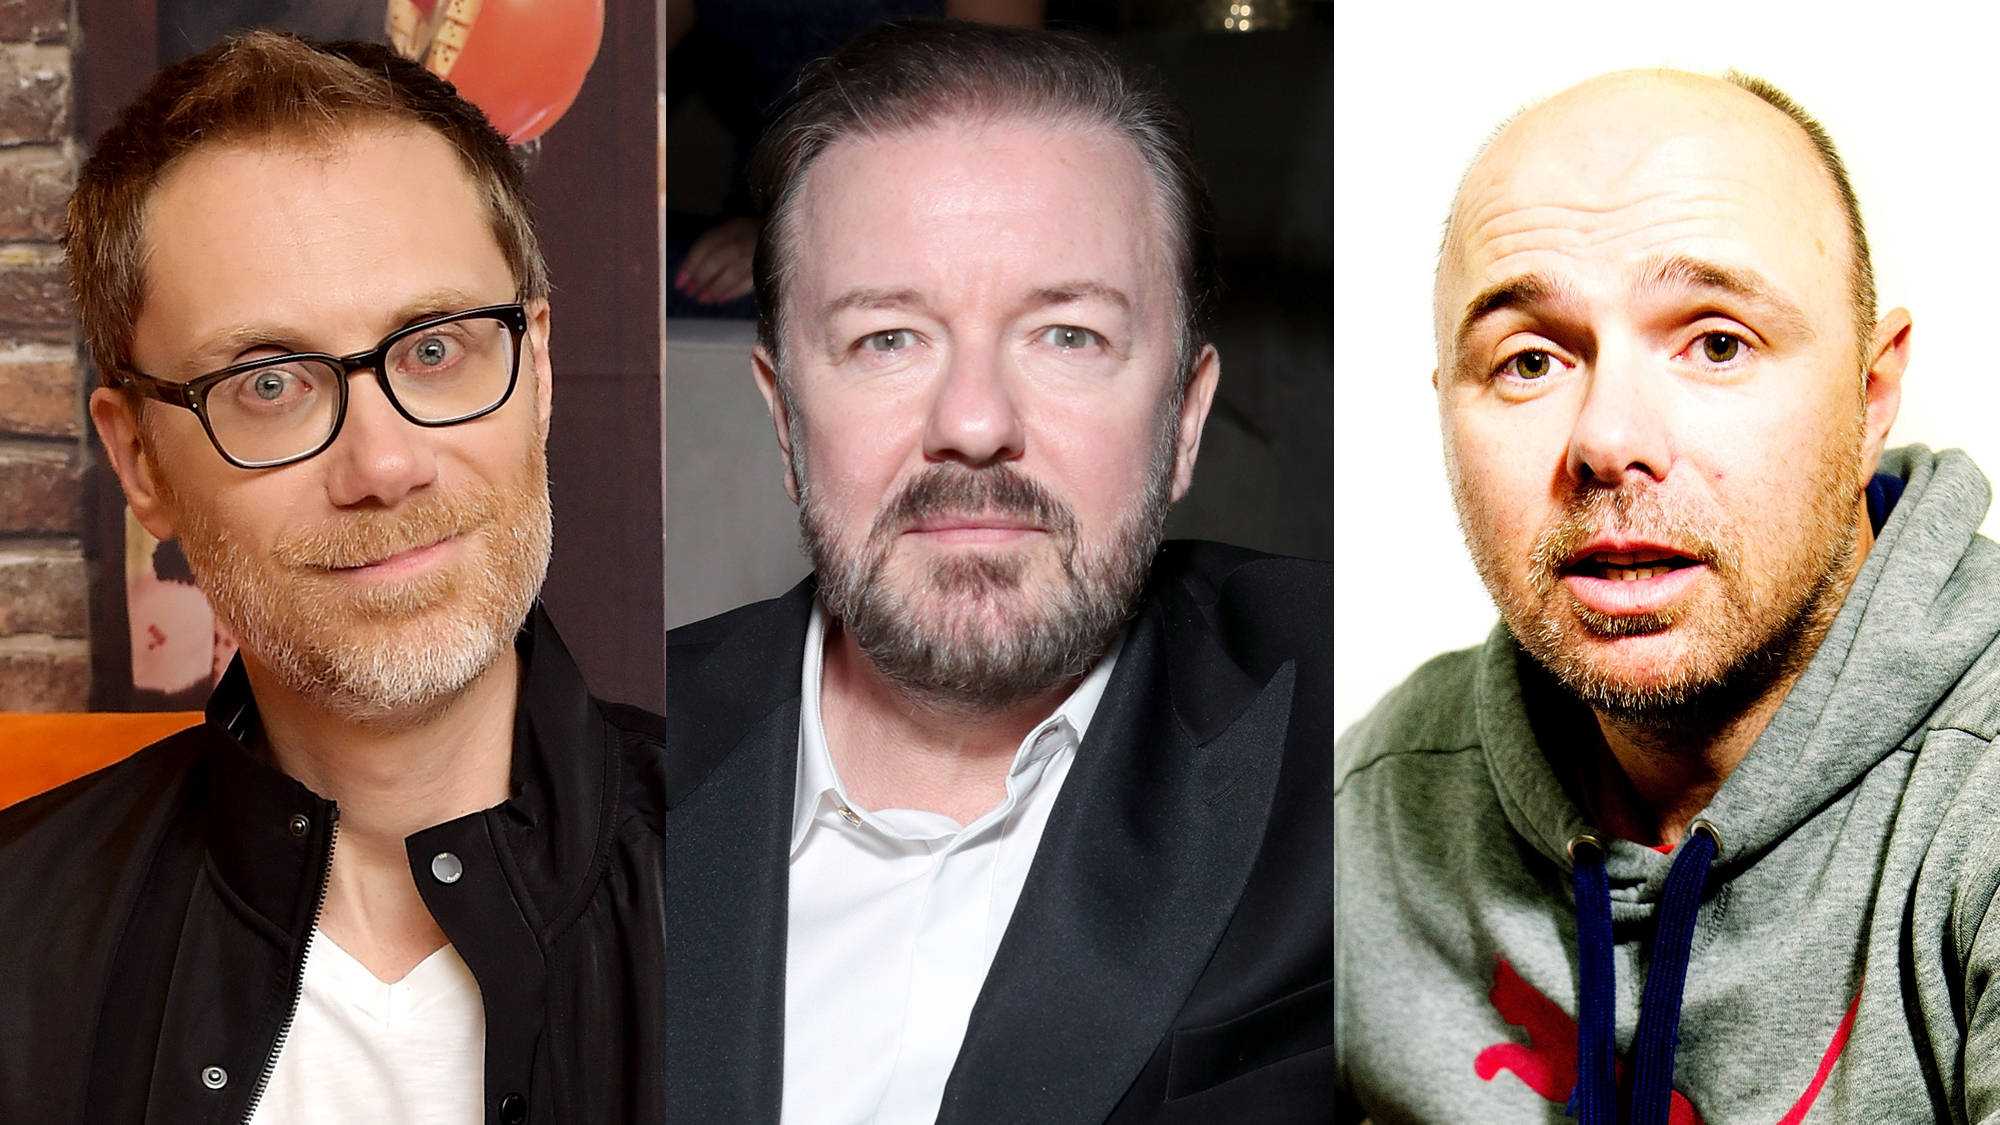 The Ricky Gervais Show cast